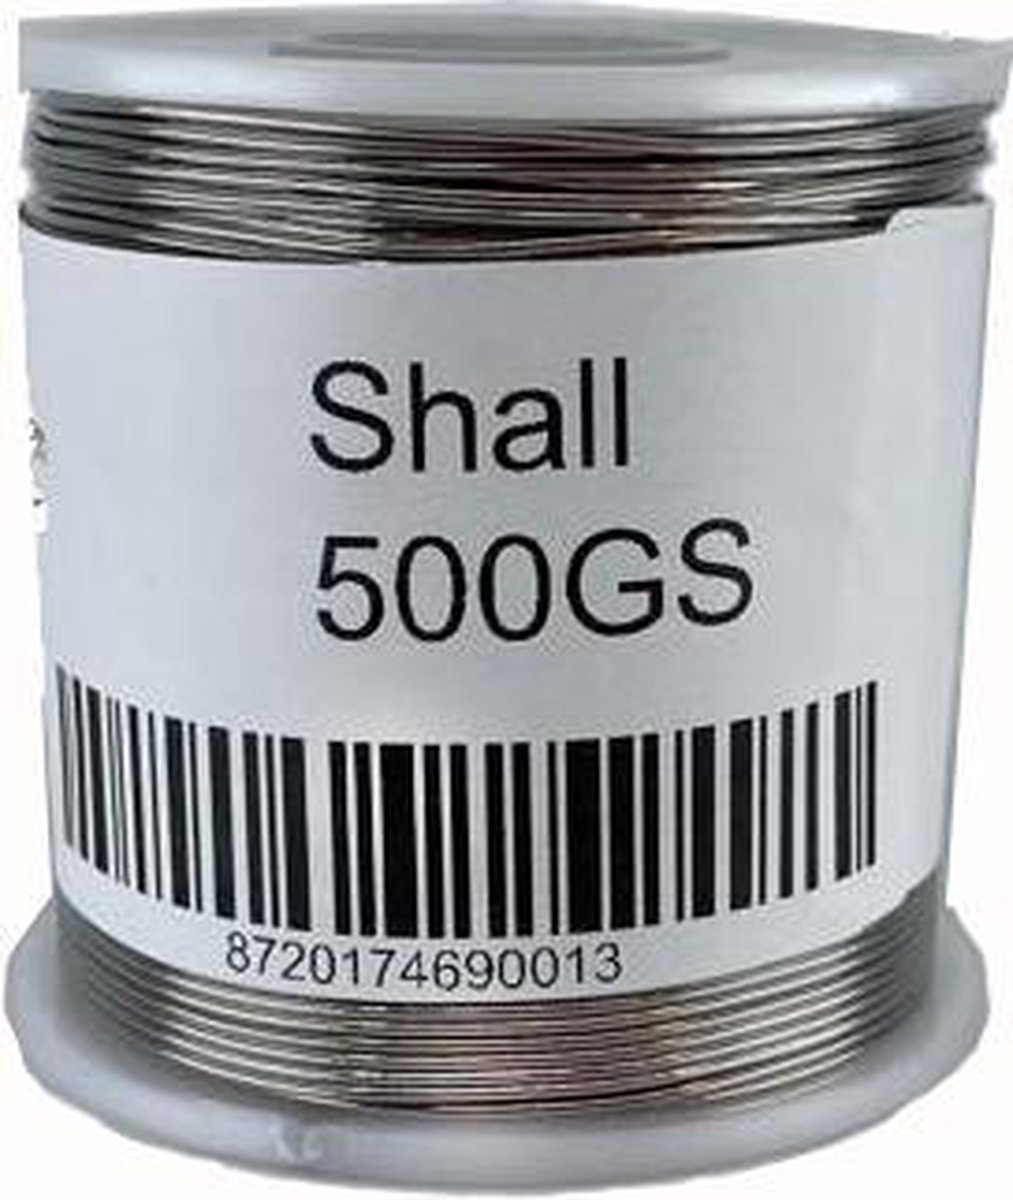 Shall 500GS soldeertin 500 gram 0,8 mm